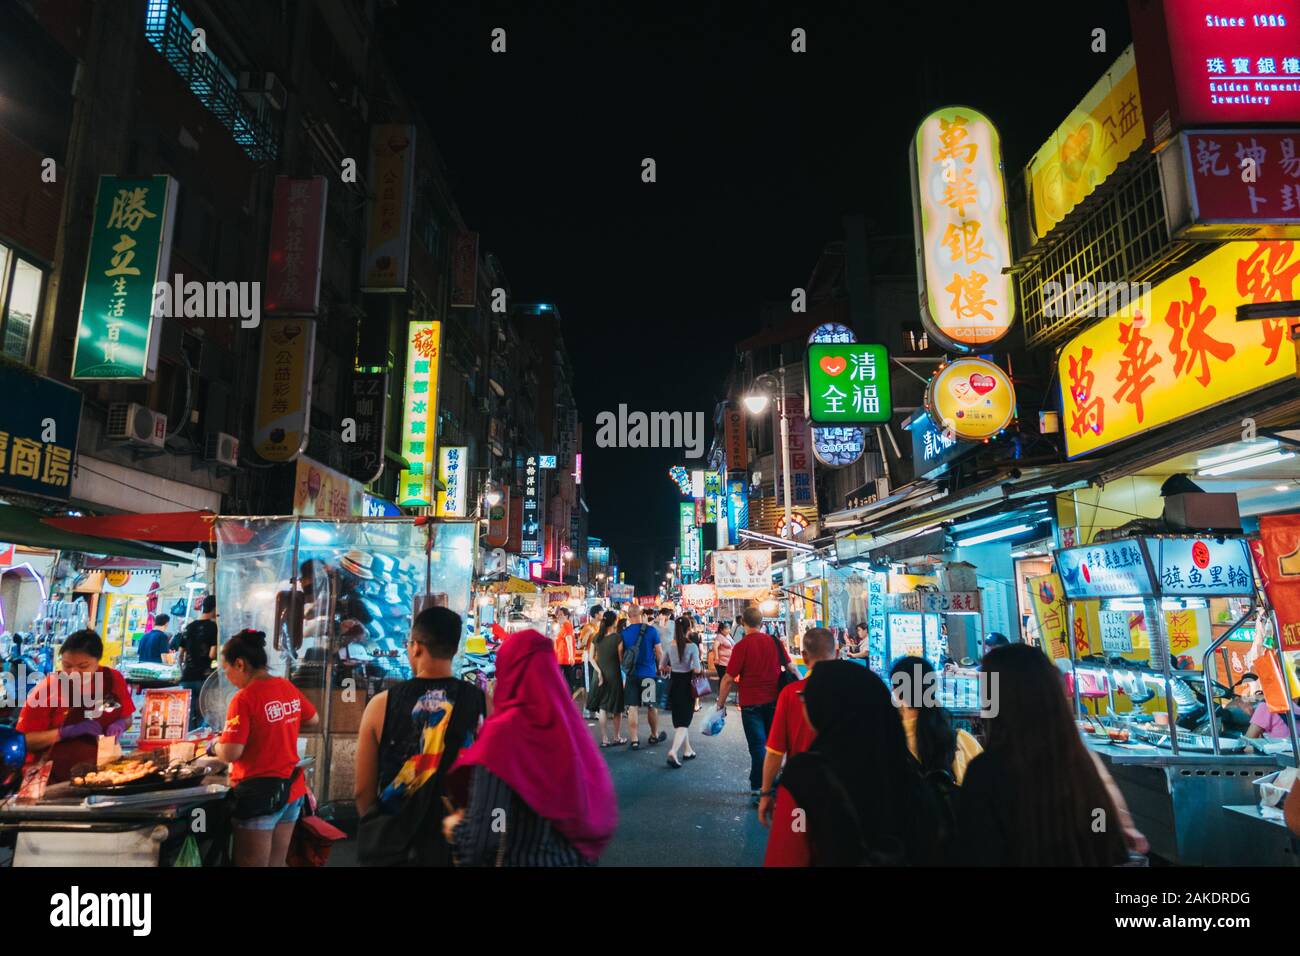 The Guangzhou Street Night Market alive at night in Taipei, Taiwan Stock Photo